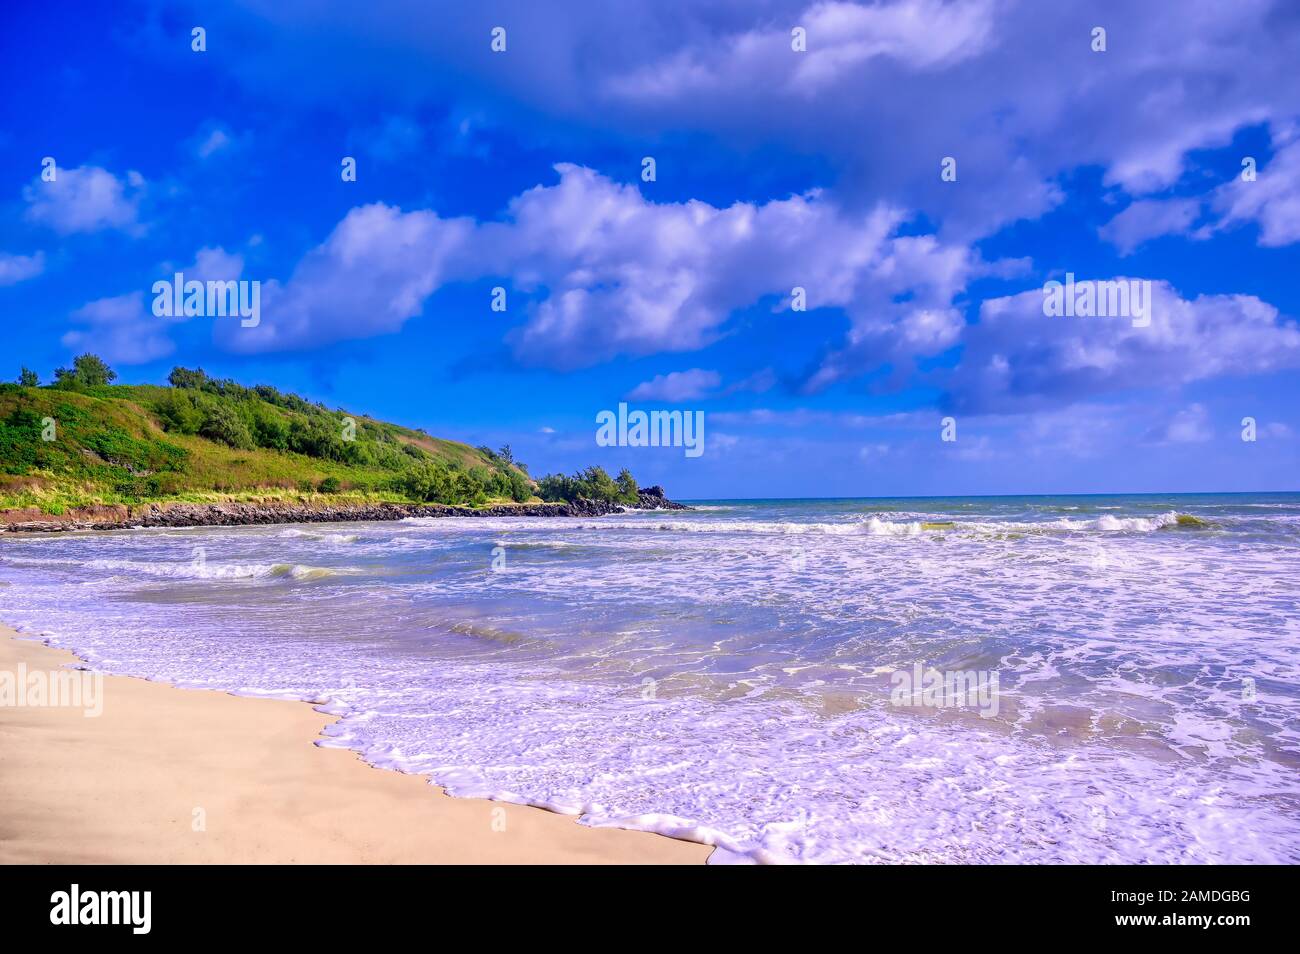 The beach along the coast of Kauai, Hawaii. Stock Photo